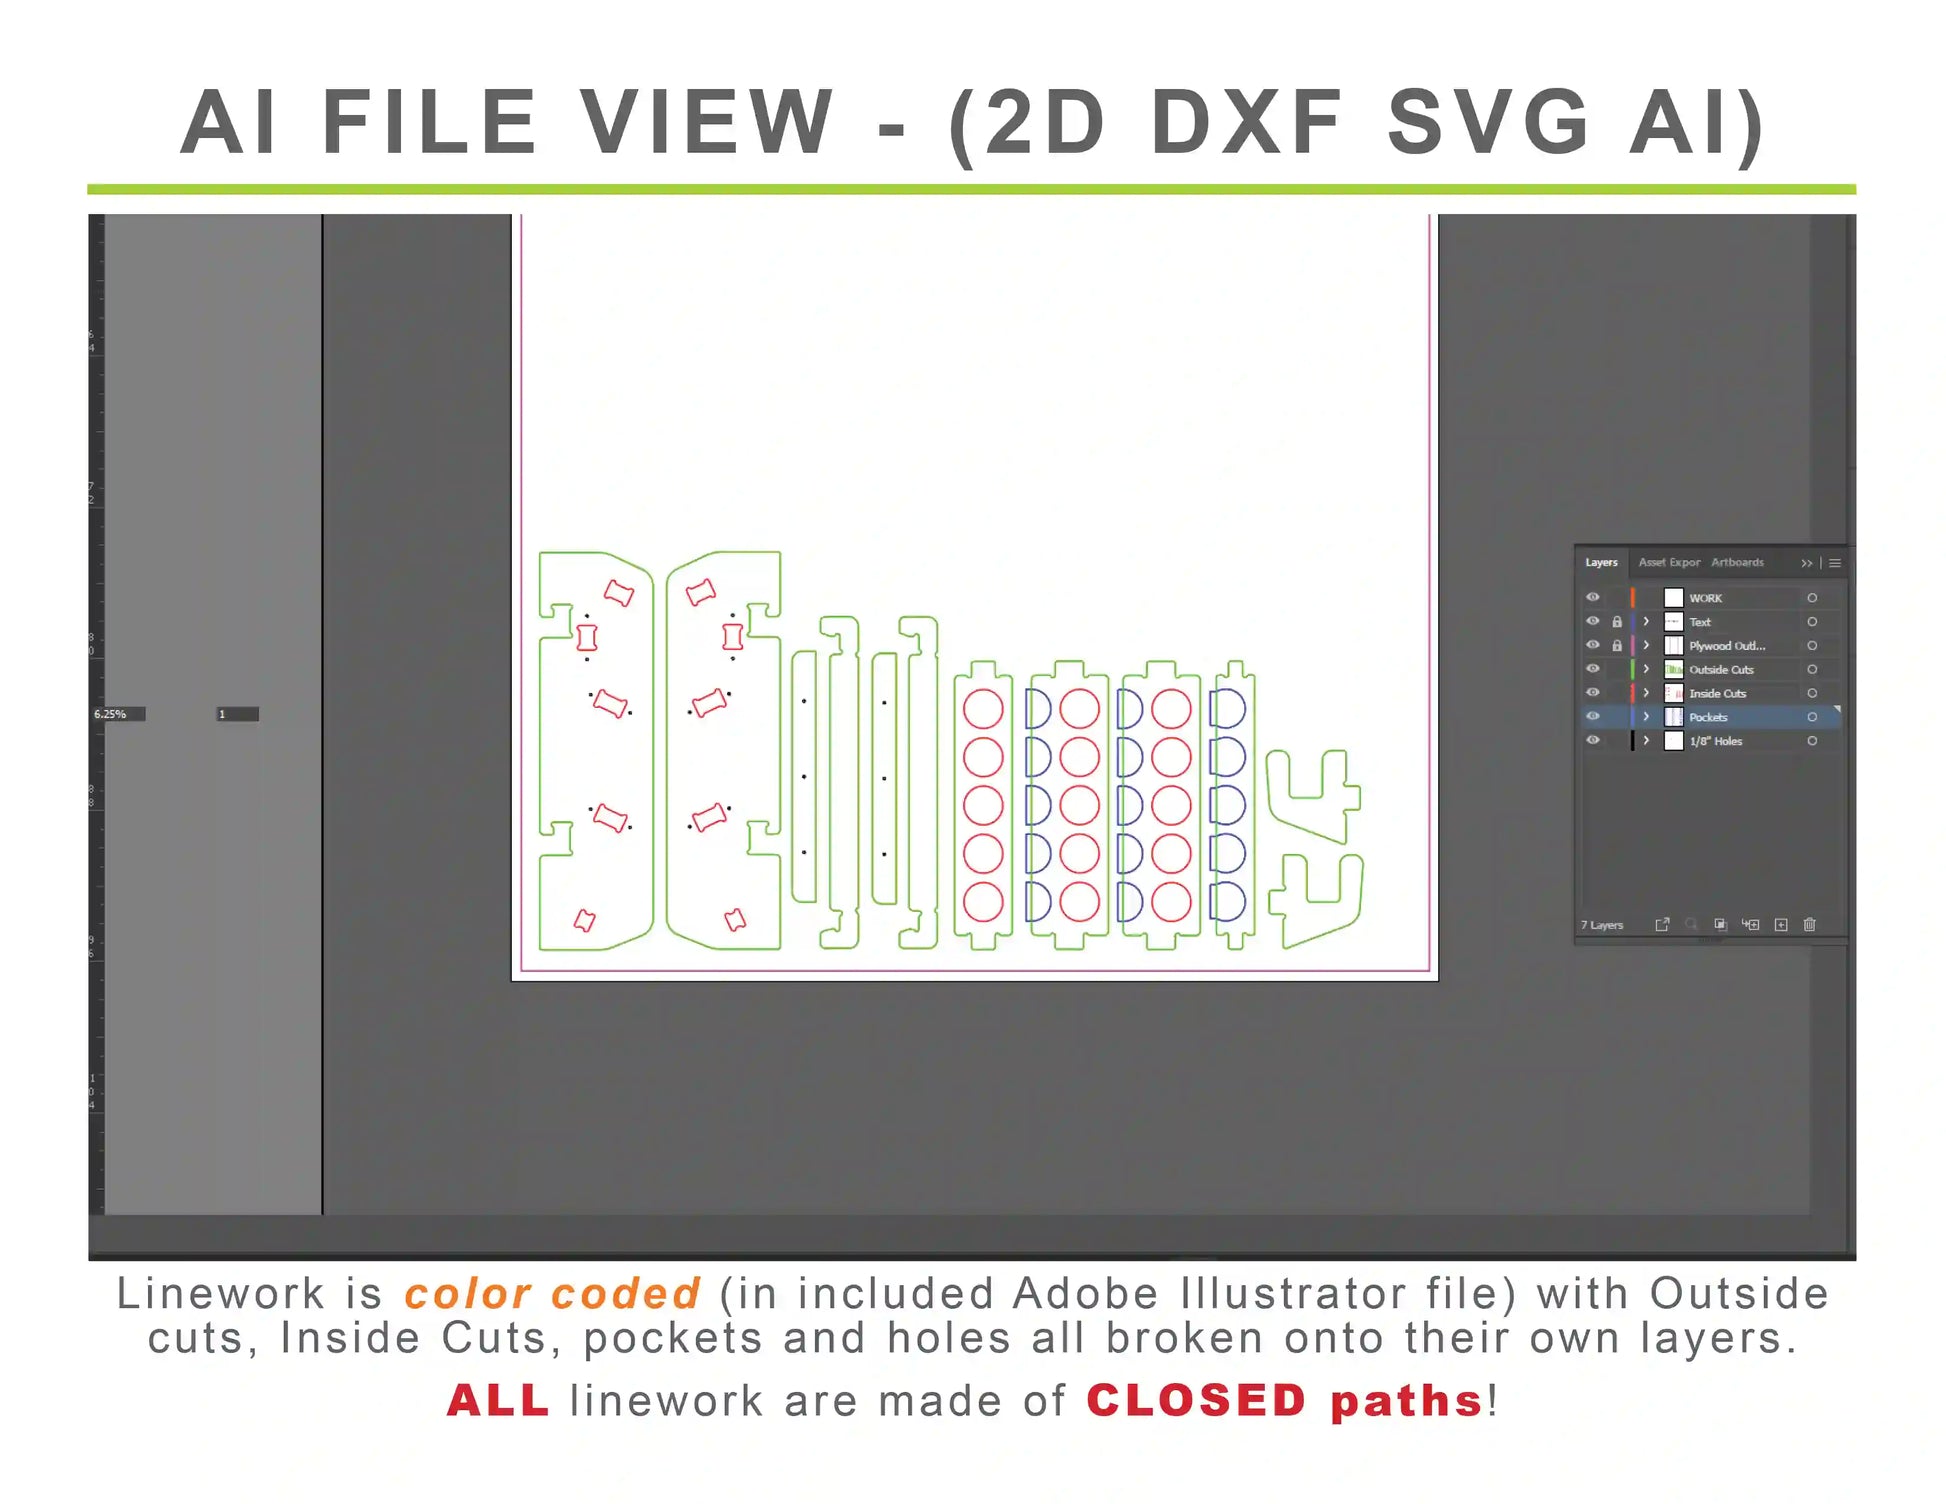 caulking tube storage holder adobe illustrator dxf svg 2d linework files 